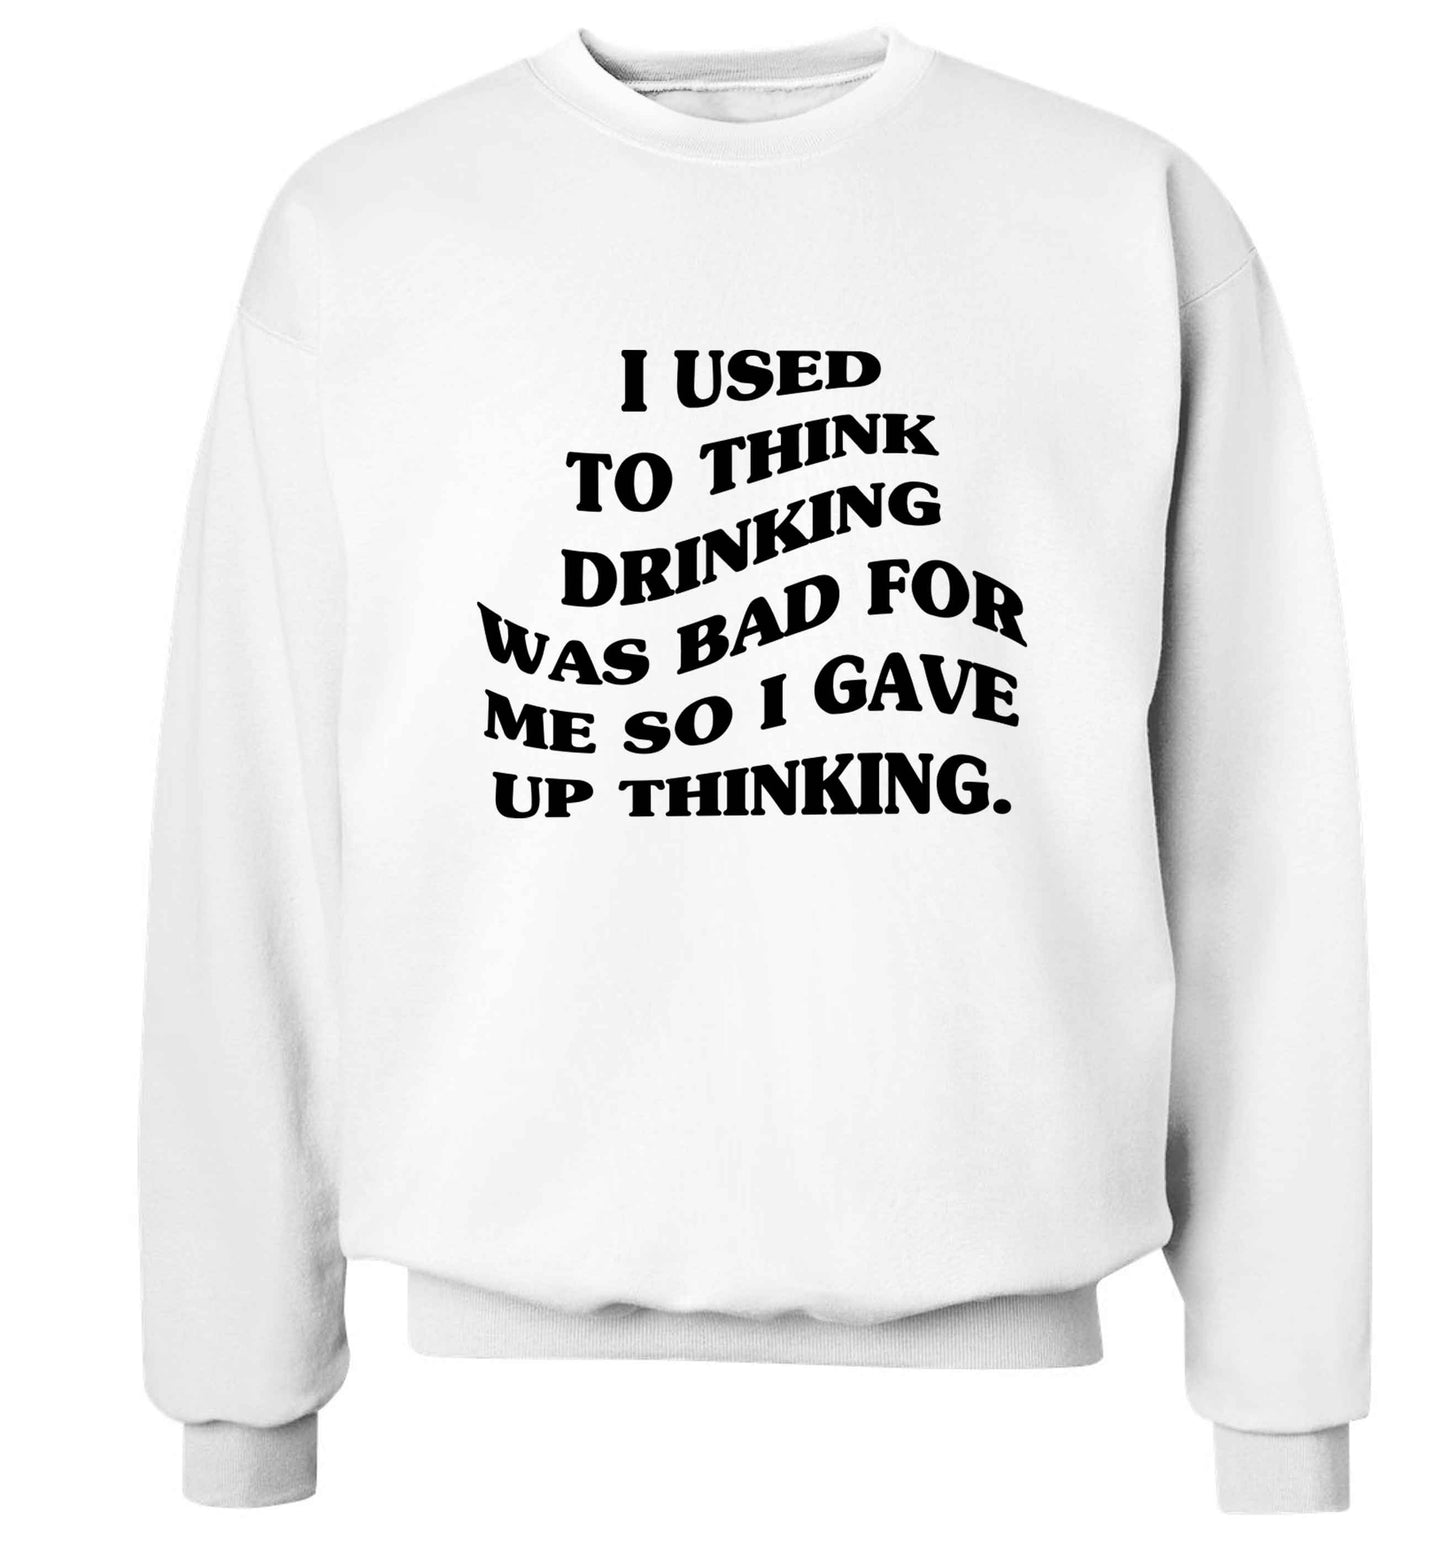 I used to think drinking was bad so I gave up thinking Adult's unisex white Sweater 2XL